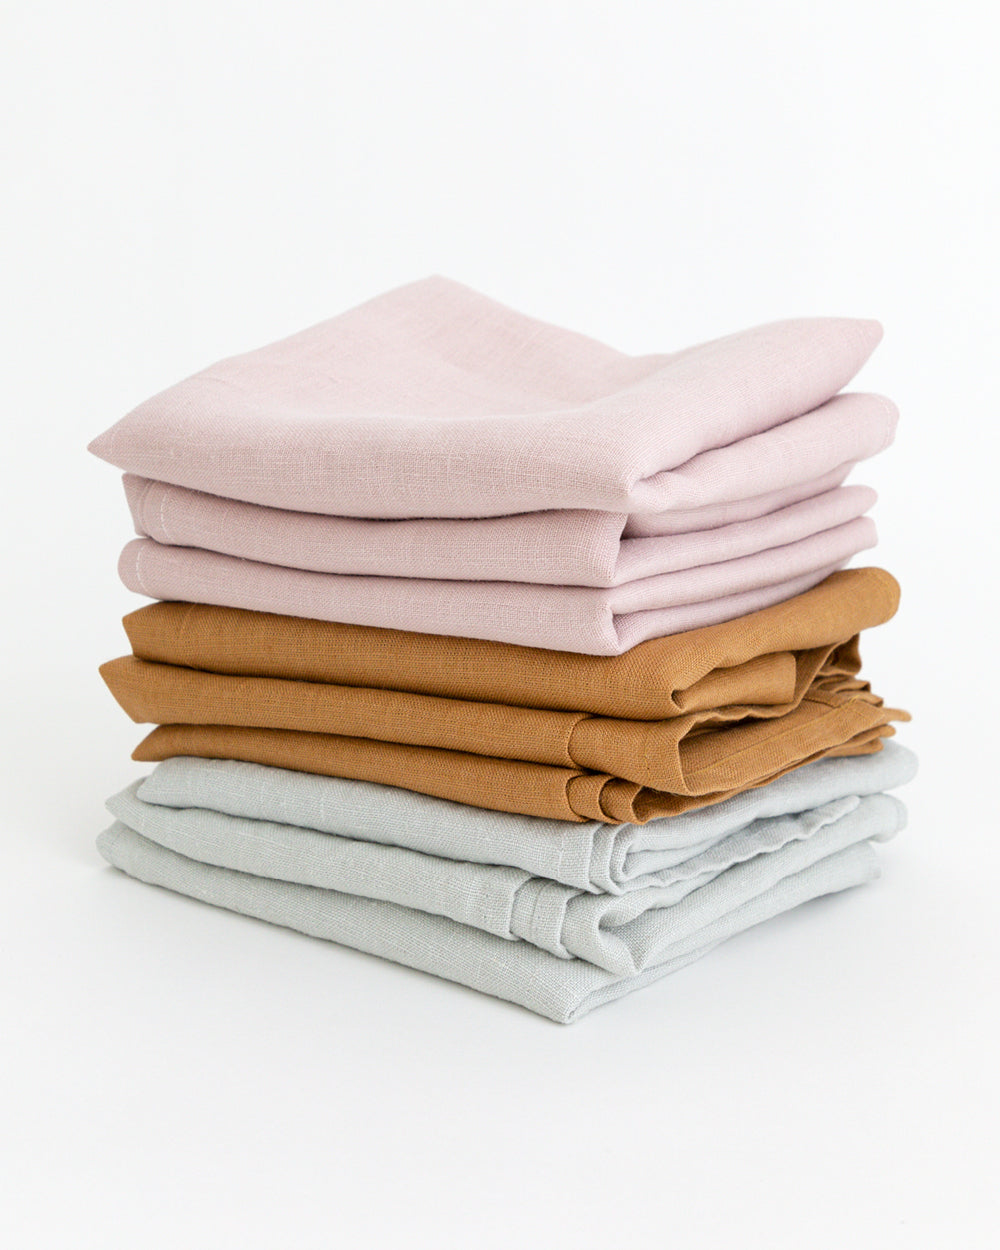 Stack of Linen tea towels from Hemme linen tea towel collection